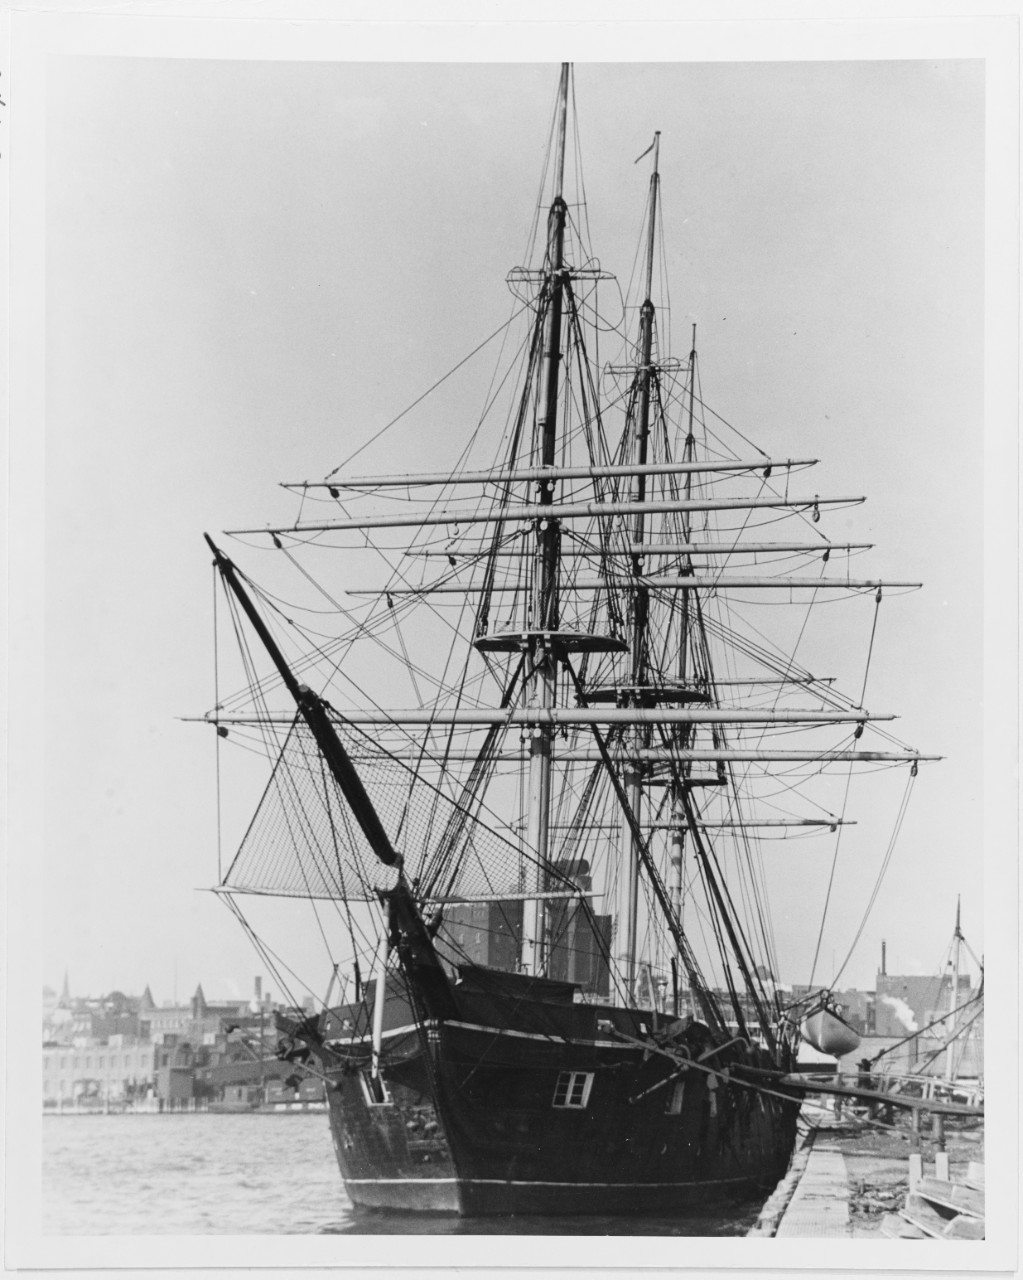 USS PORTSMOUTH (1843-1915)